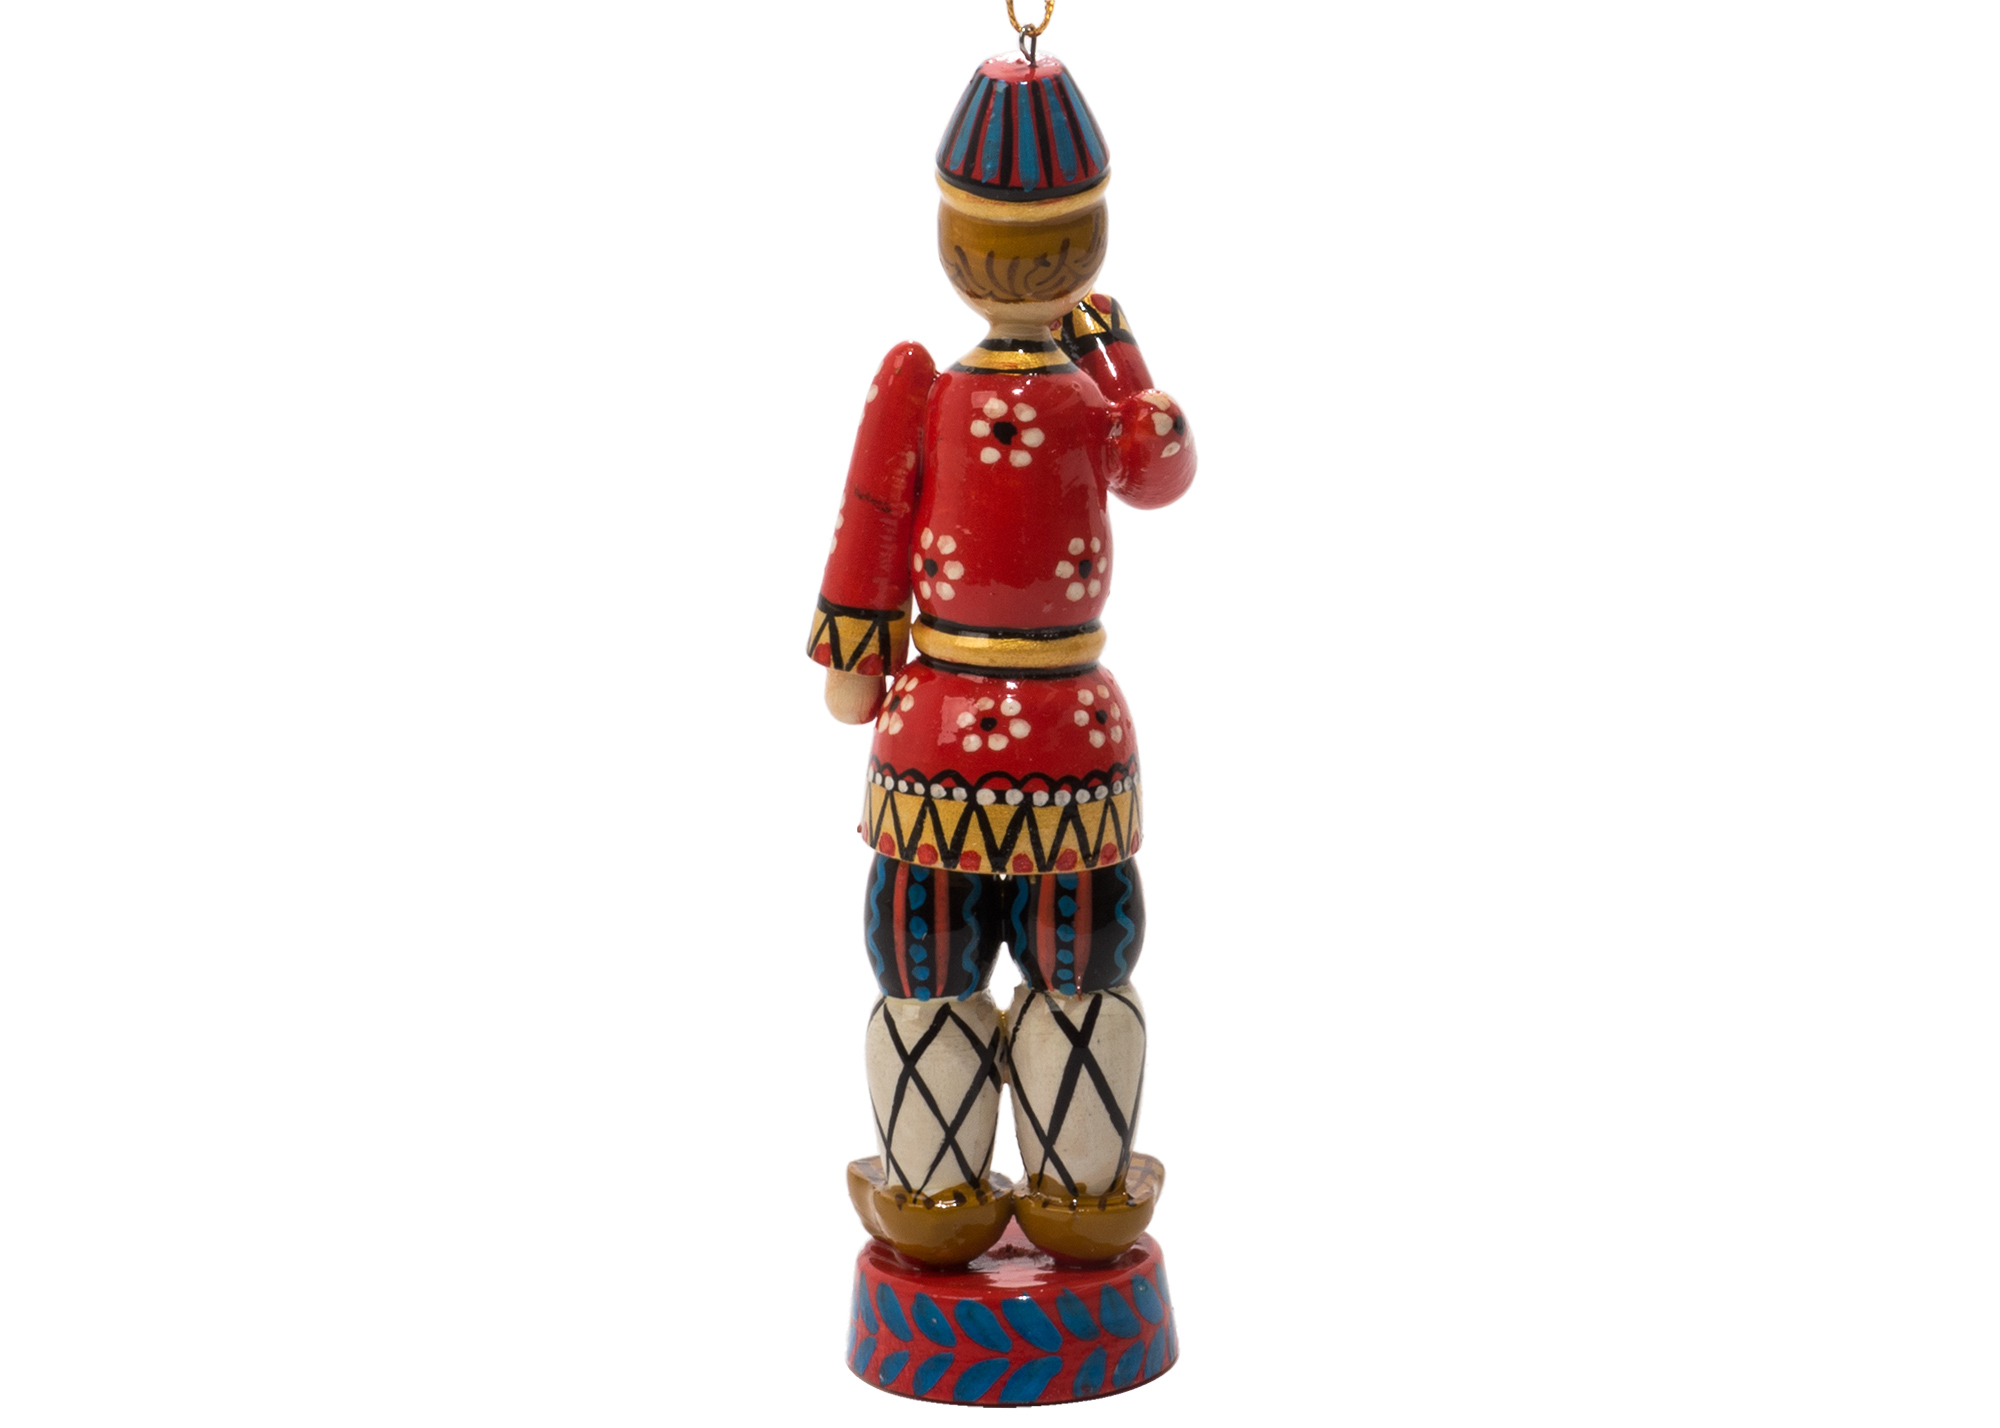 Buy Russian Folk Rozhok Player Ornament 5" at GoldenCockerel.com